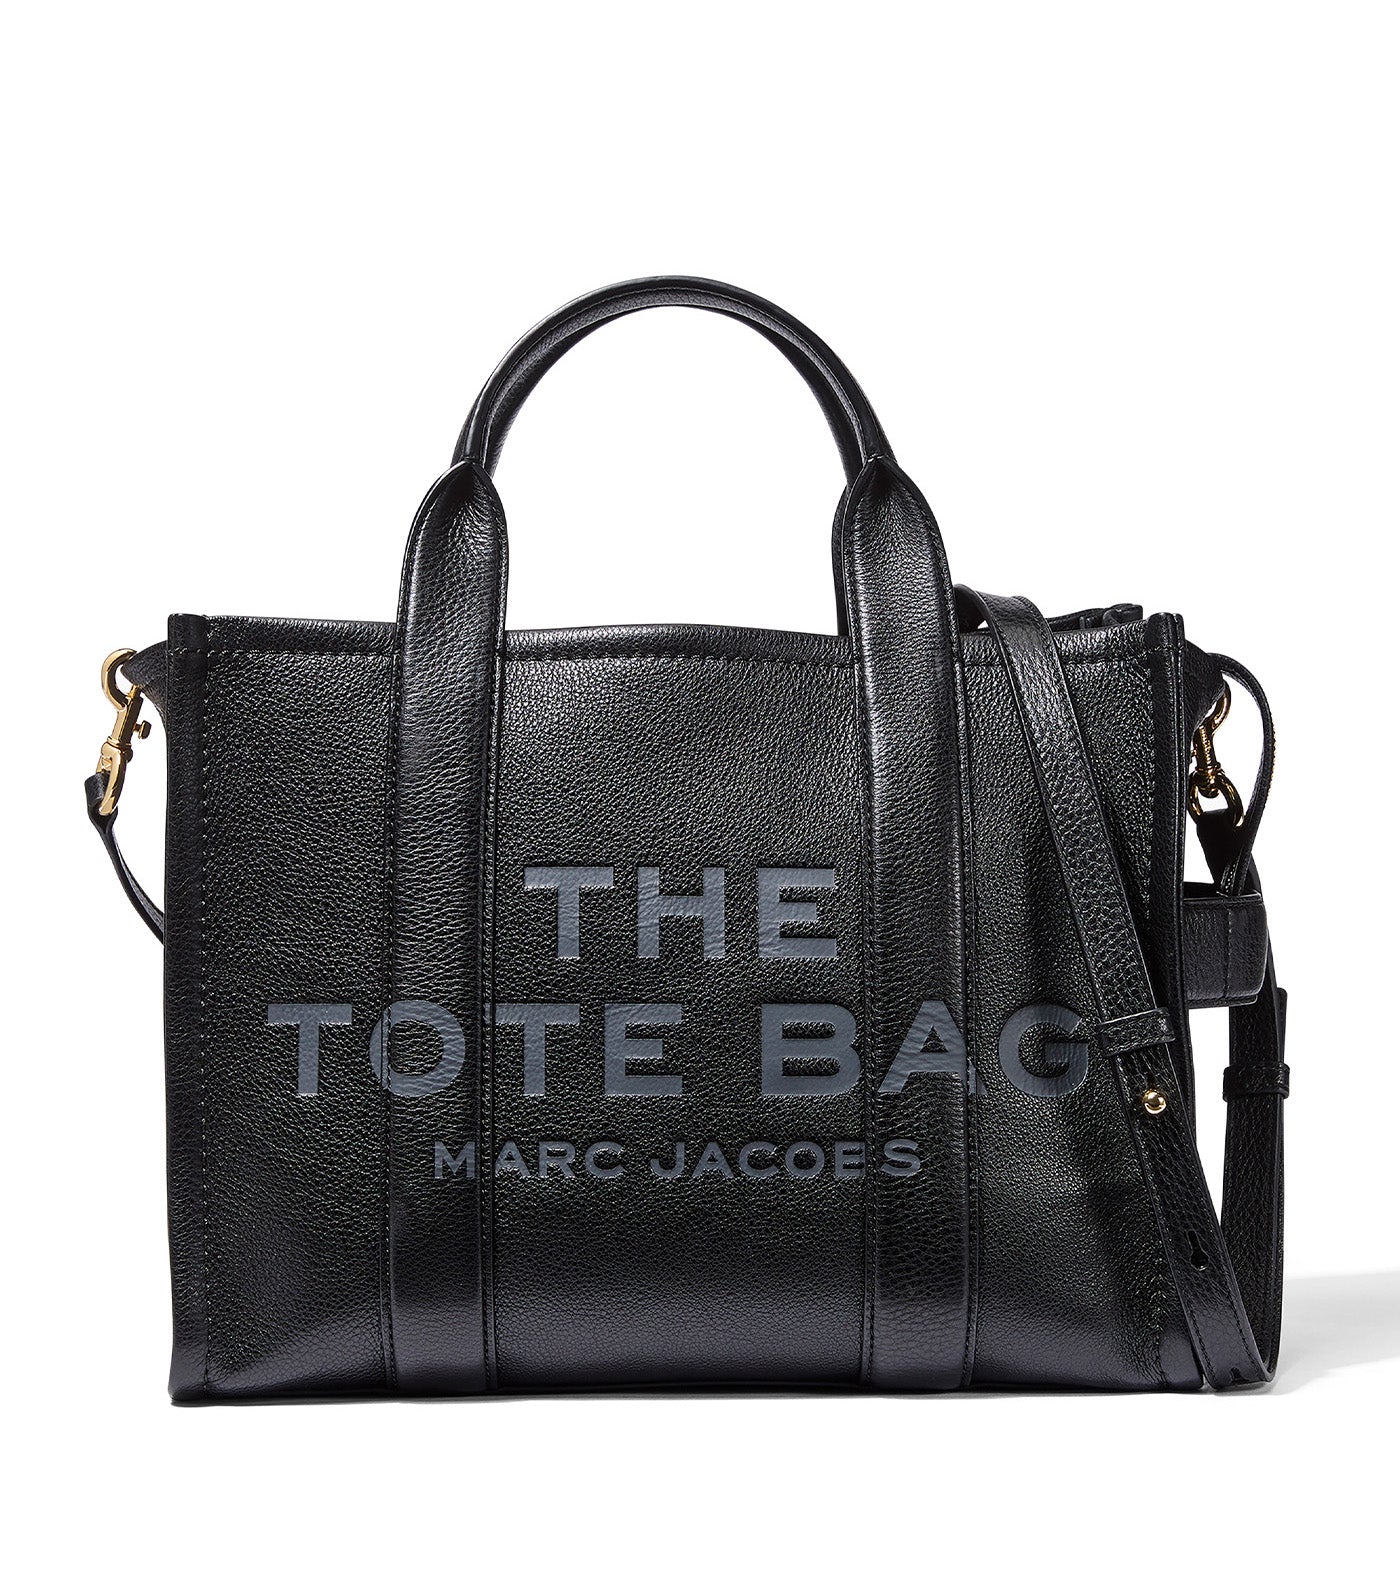 The Leather Medium Tote Bag Black